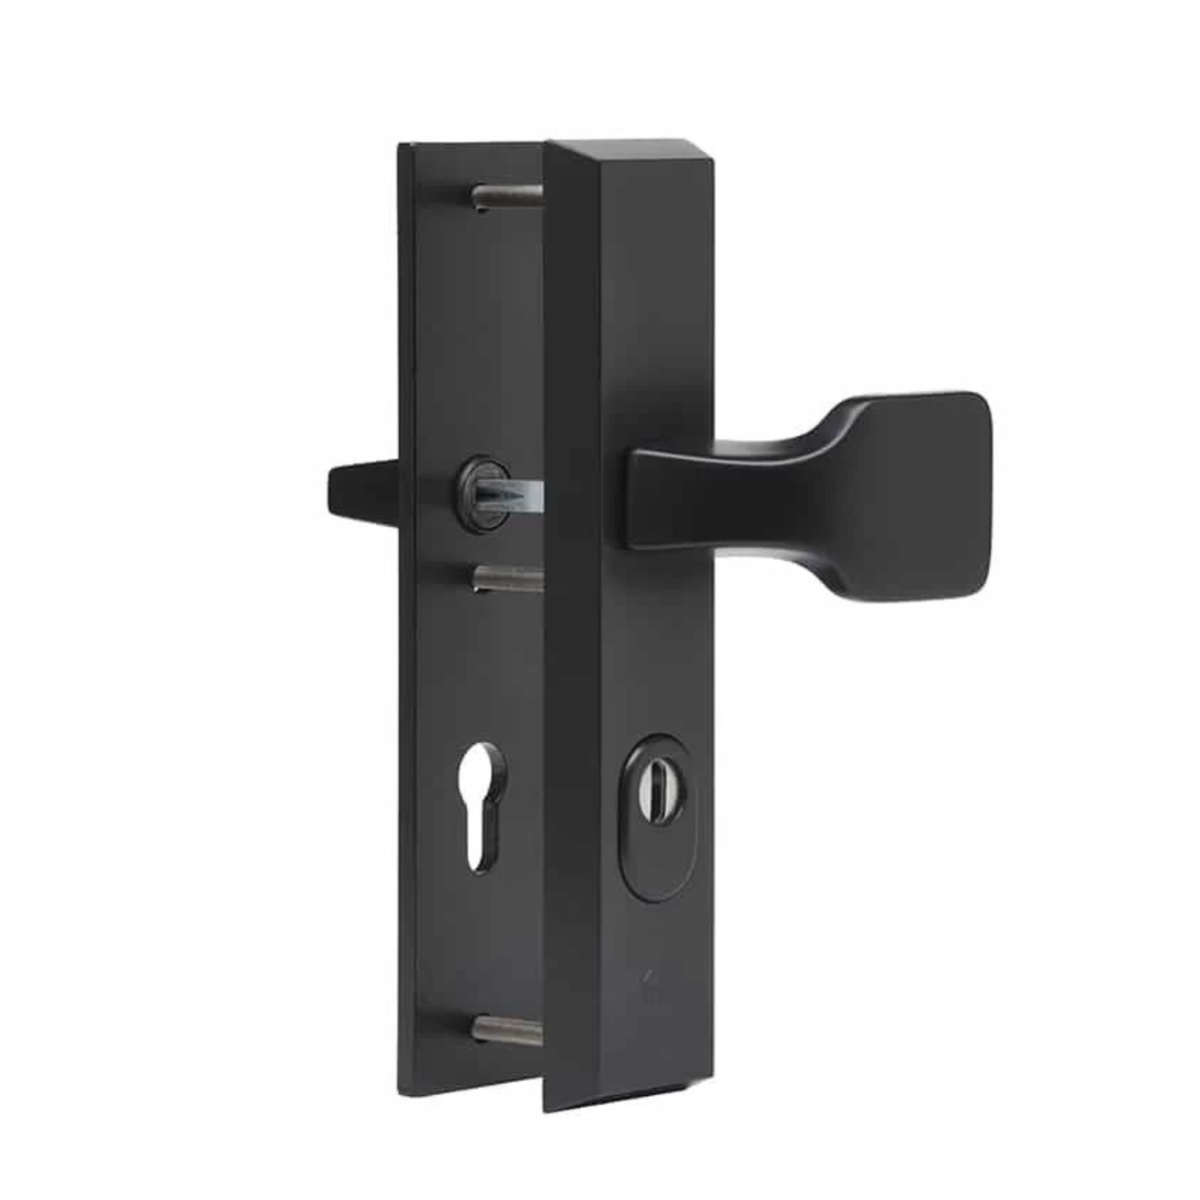 Dieckmann Alpha front door fitting with fixed handle D7011N - Matt black, door fitting for commercial buildings